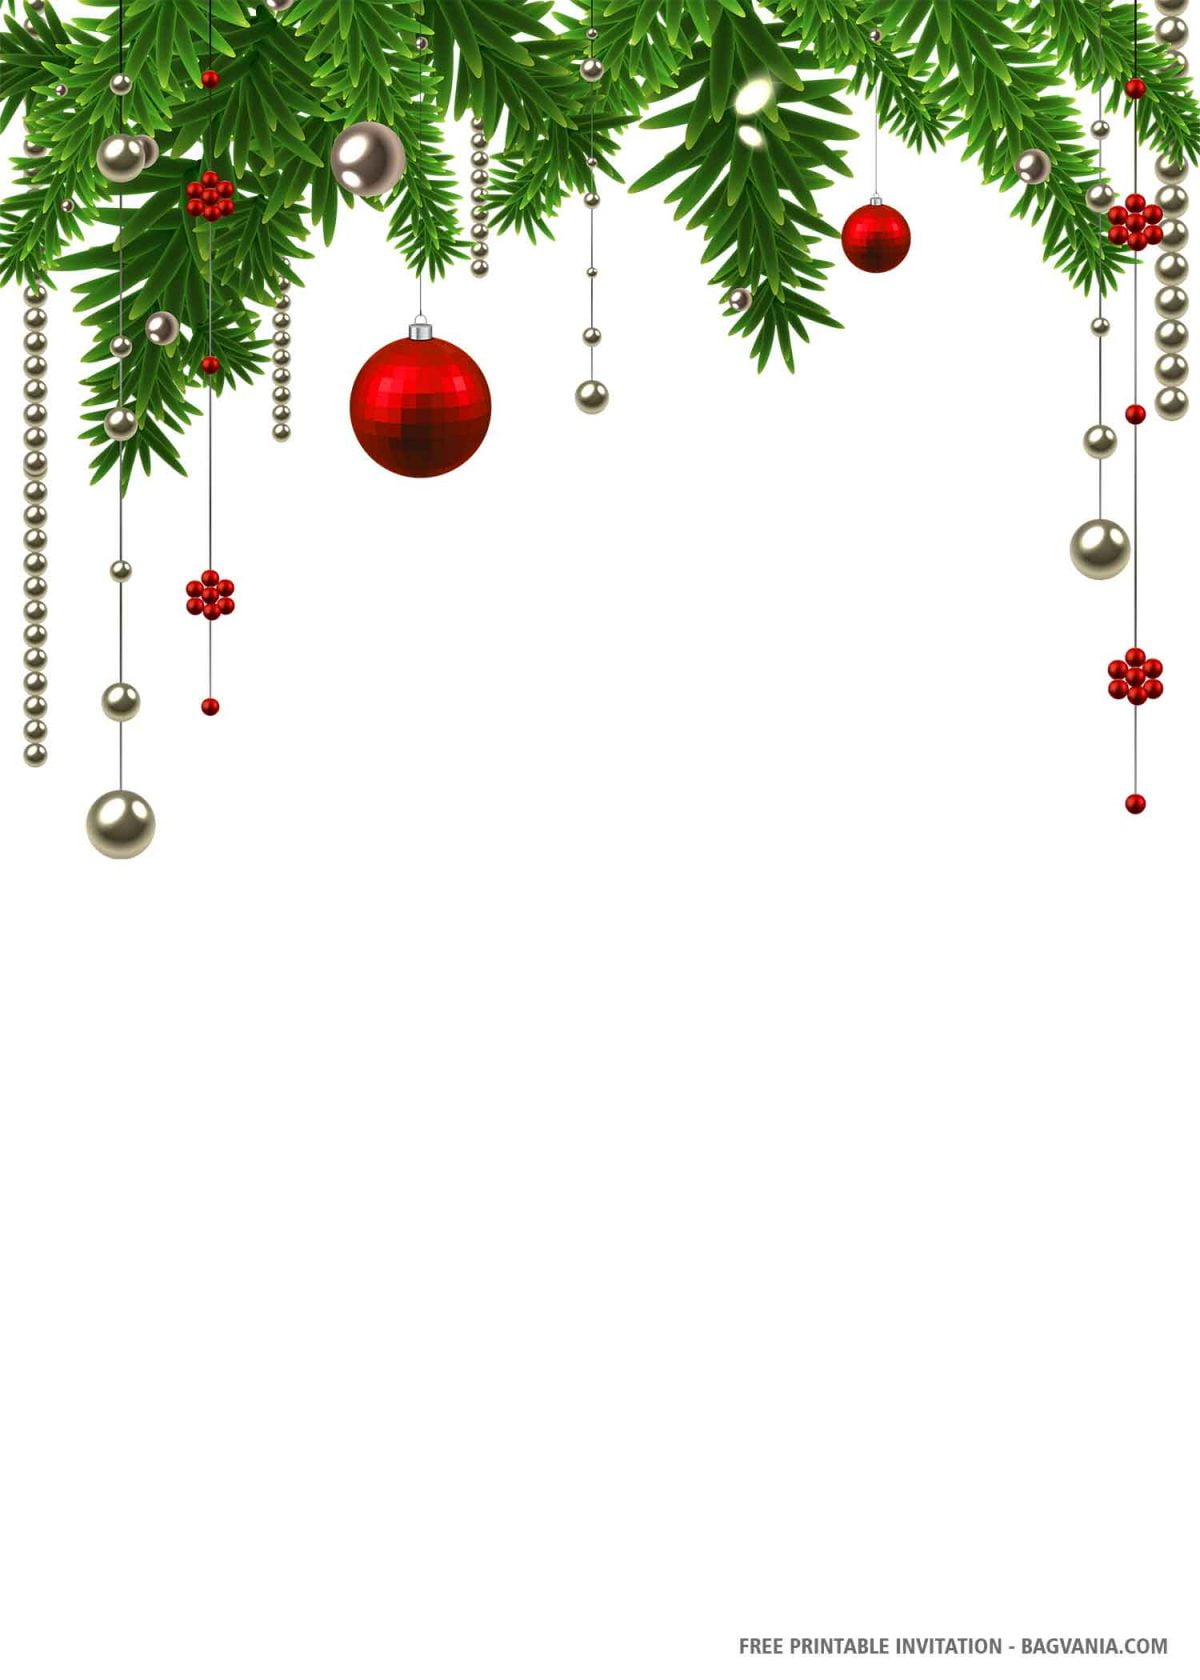 (FREE PRINTABLE) Christmas Ornament Themed Birthday Invitation